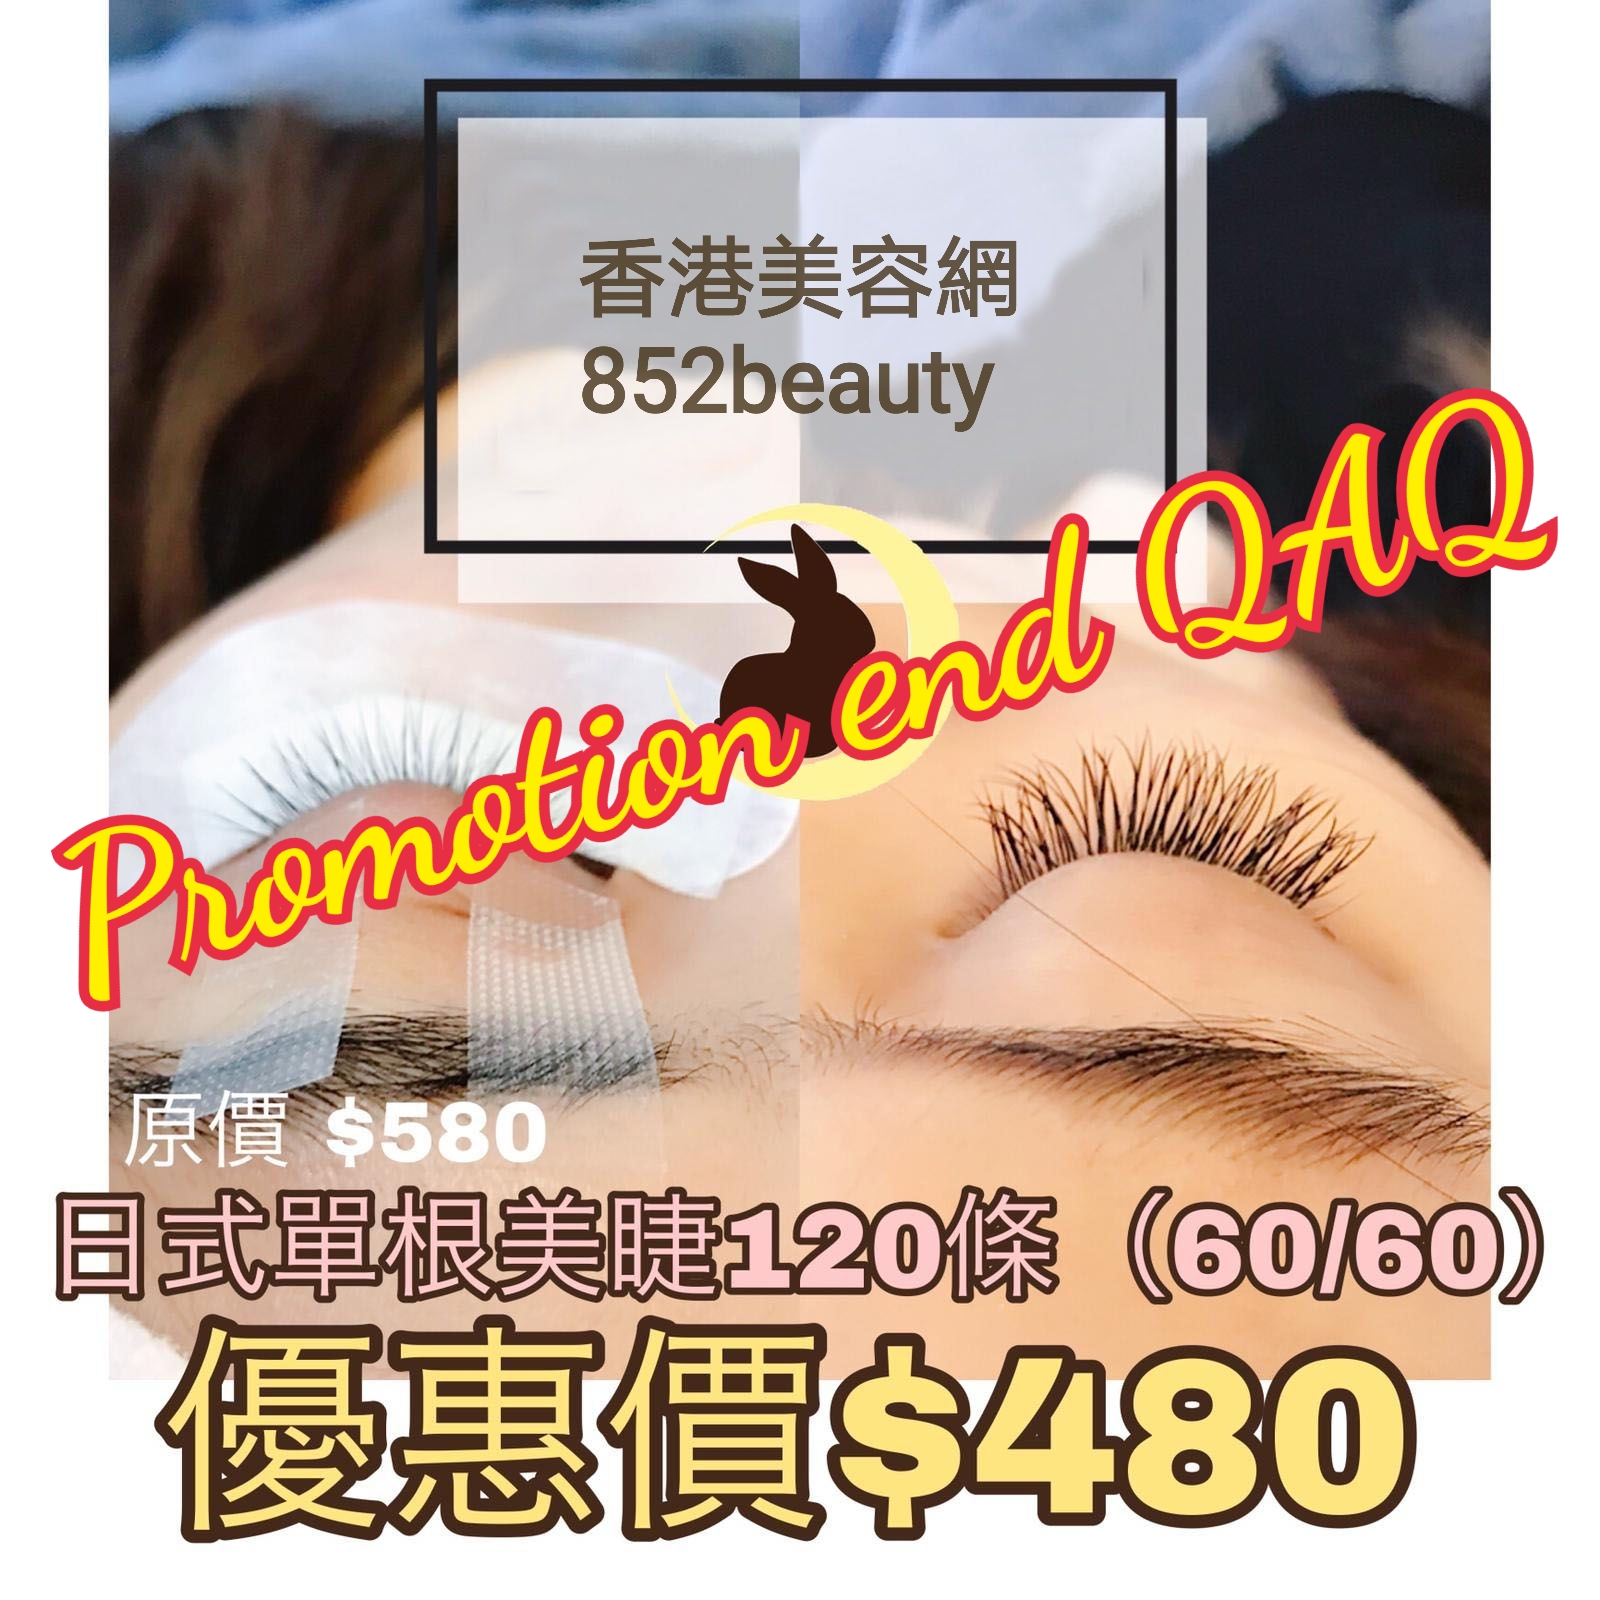 Hong Kong Beauty Salon Latest Beauty Discount: 美睫優惠 - 銅鑼灣區] 日式單根植睫毛 超優惠 $480 (已結束)